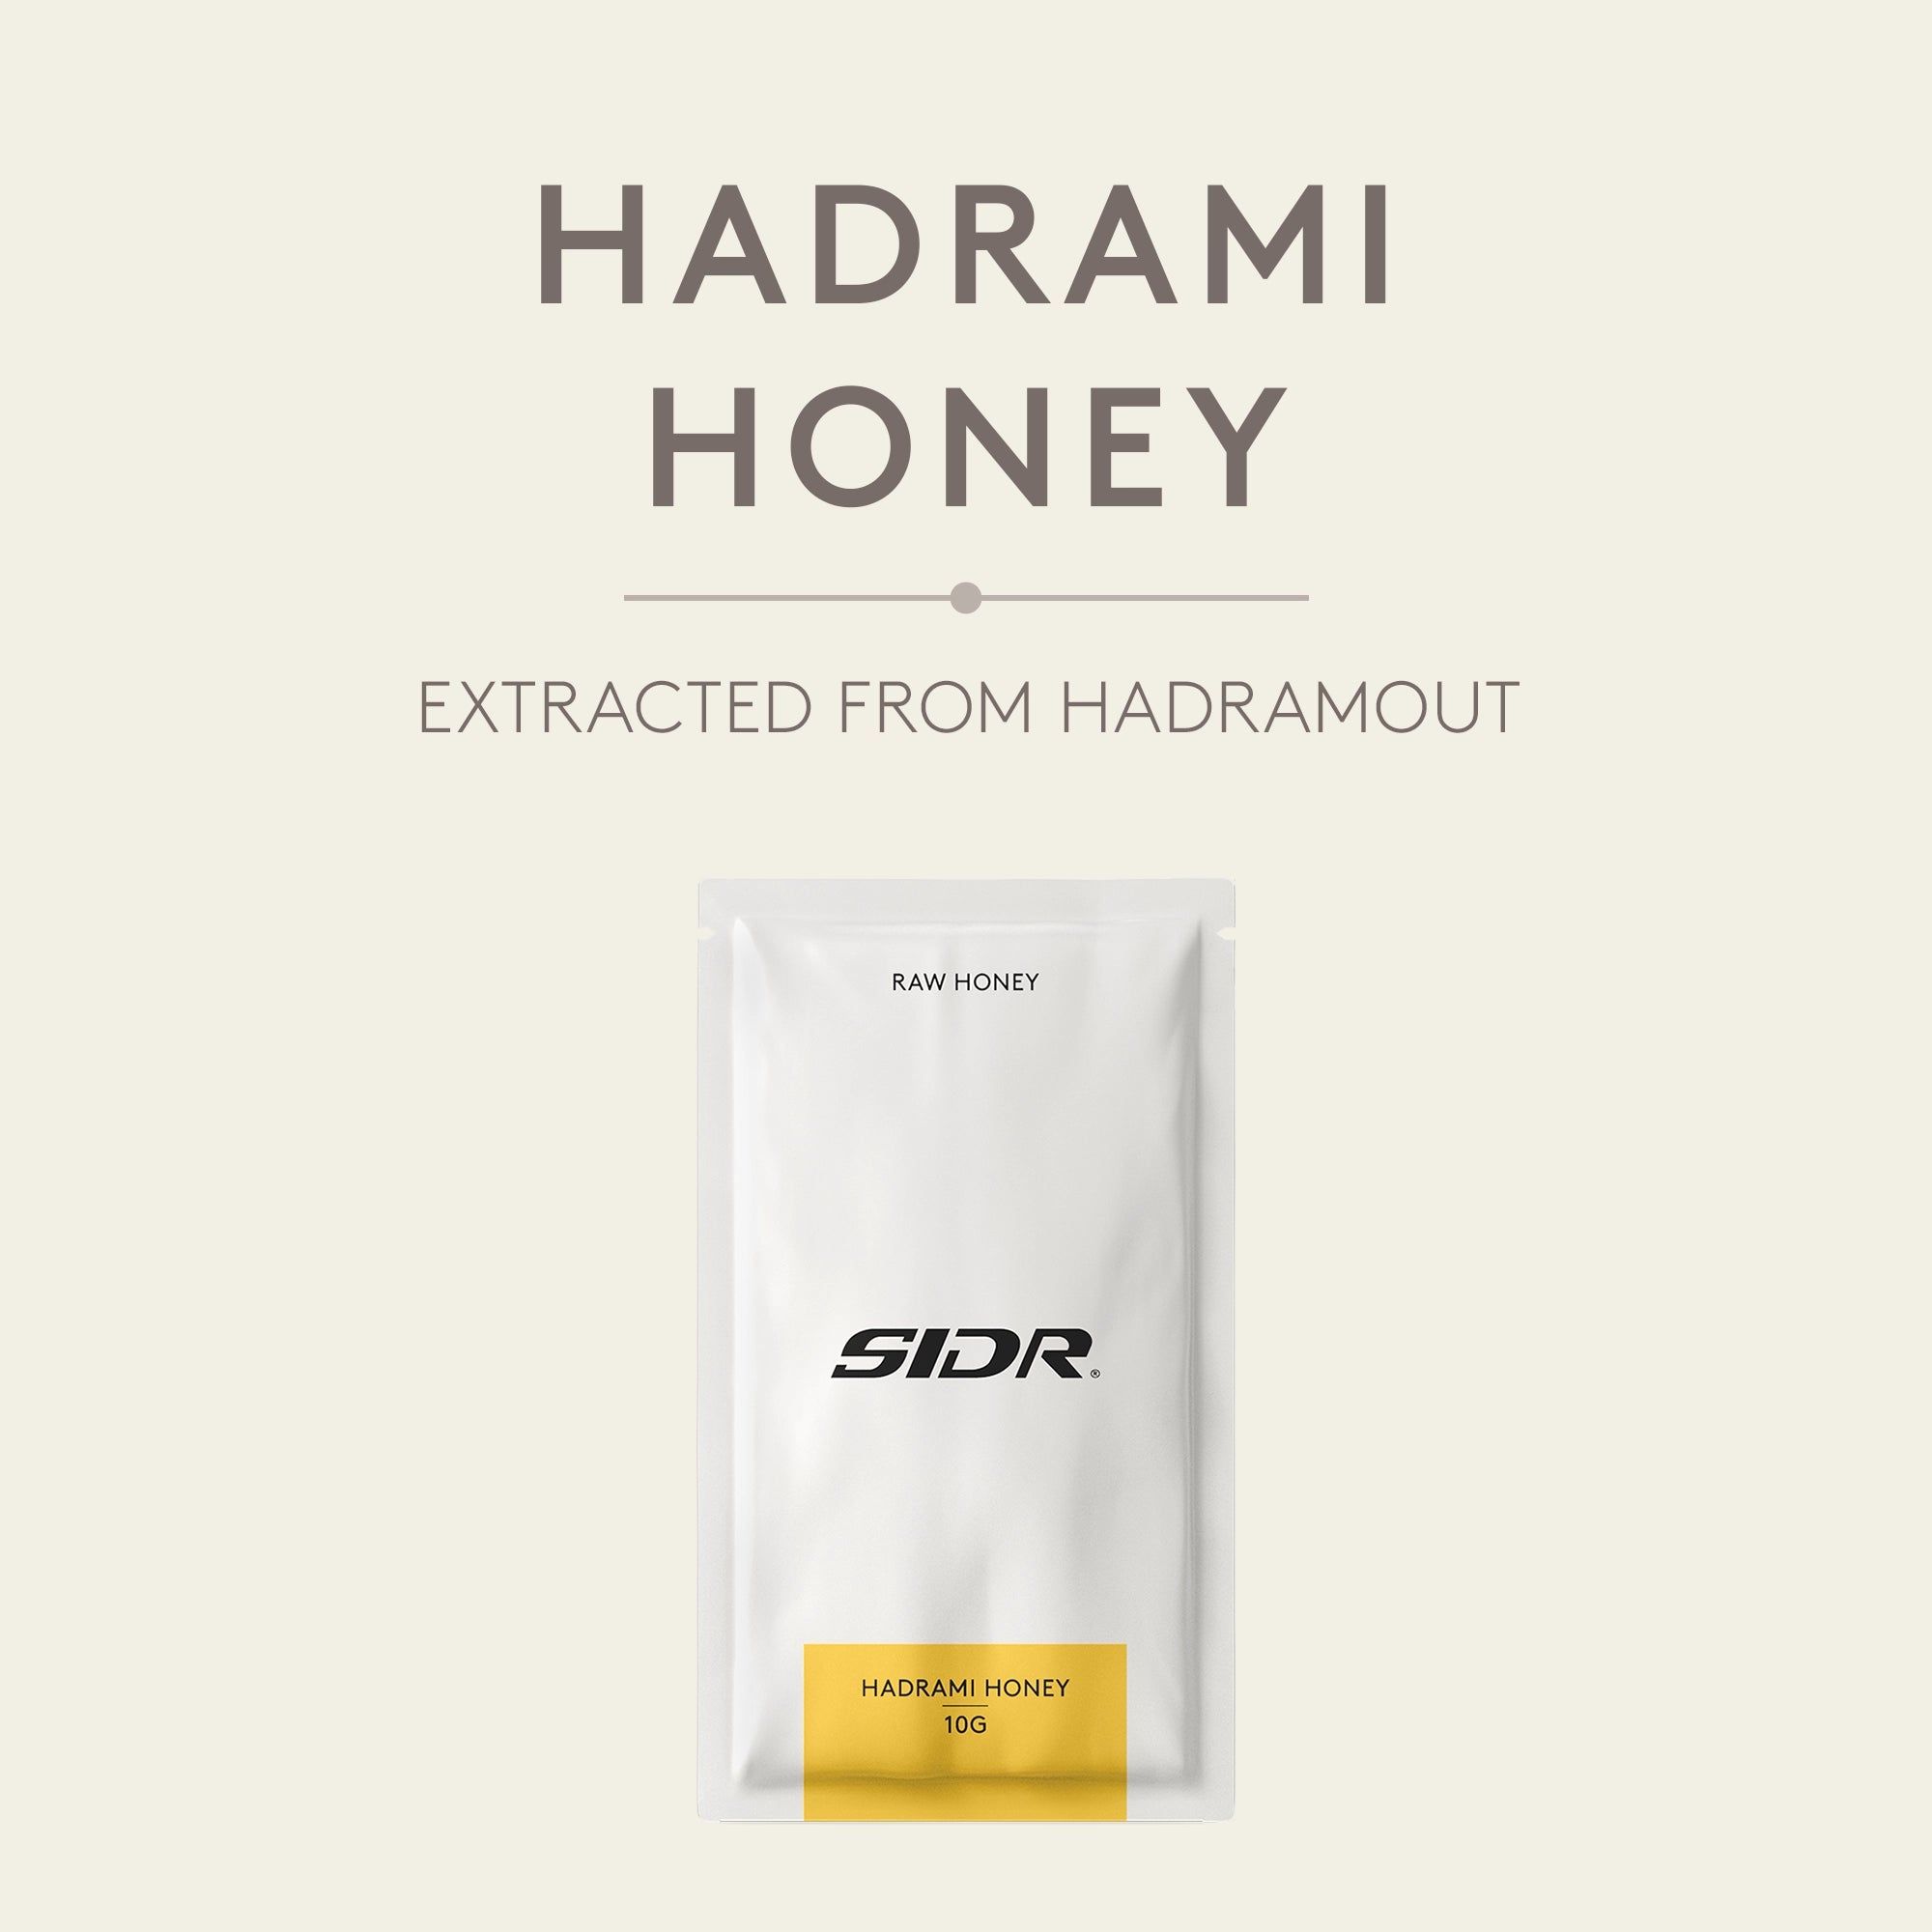 sidr hadrami honey packet from hadramout